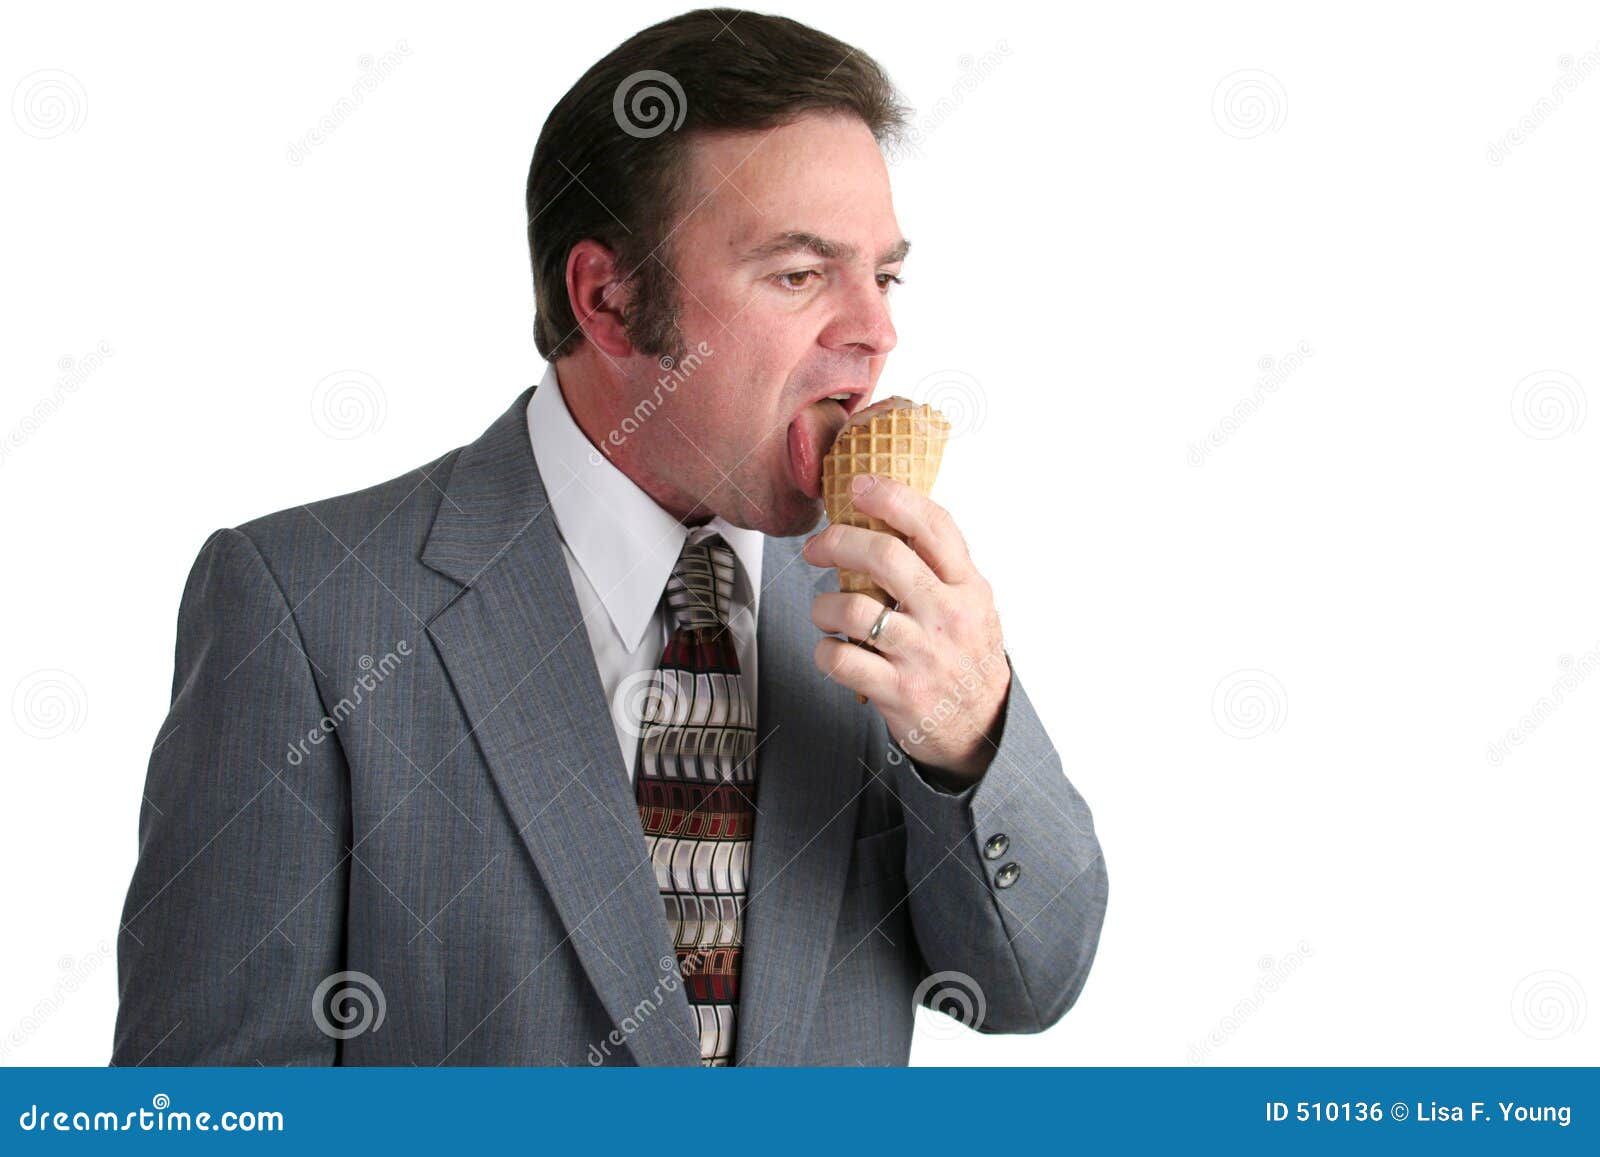 business-man-eating-ice-cream-510136.jpg